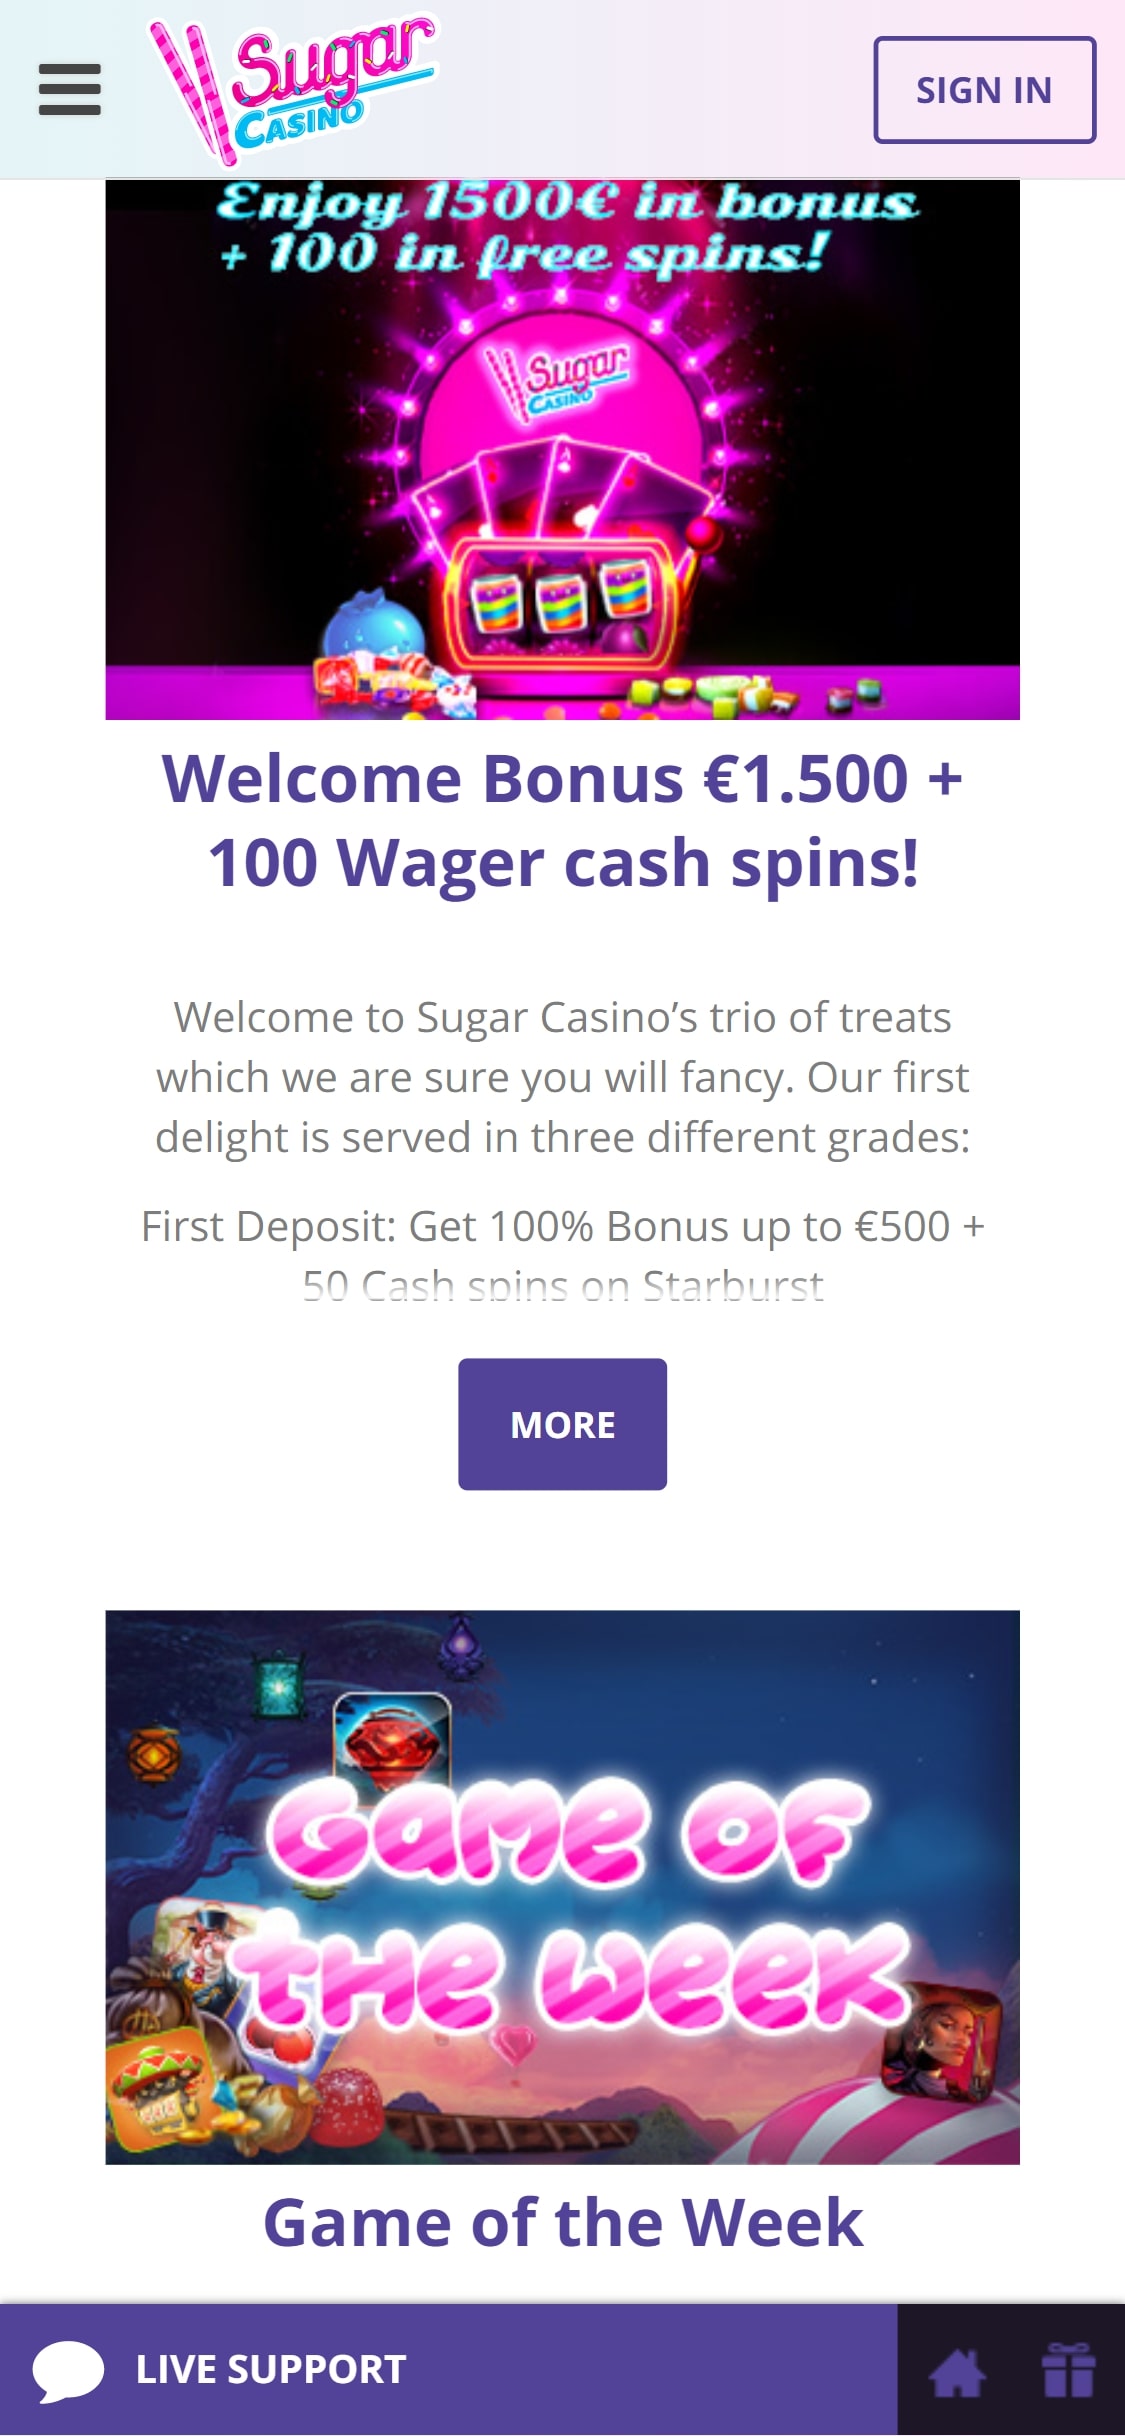 Sugar Casino Mobile No Deposit Bonus Review